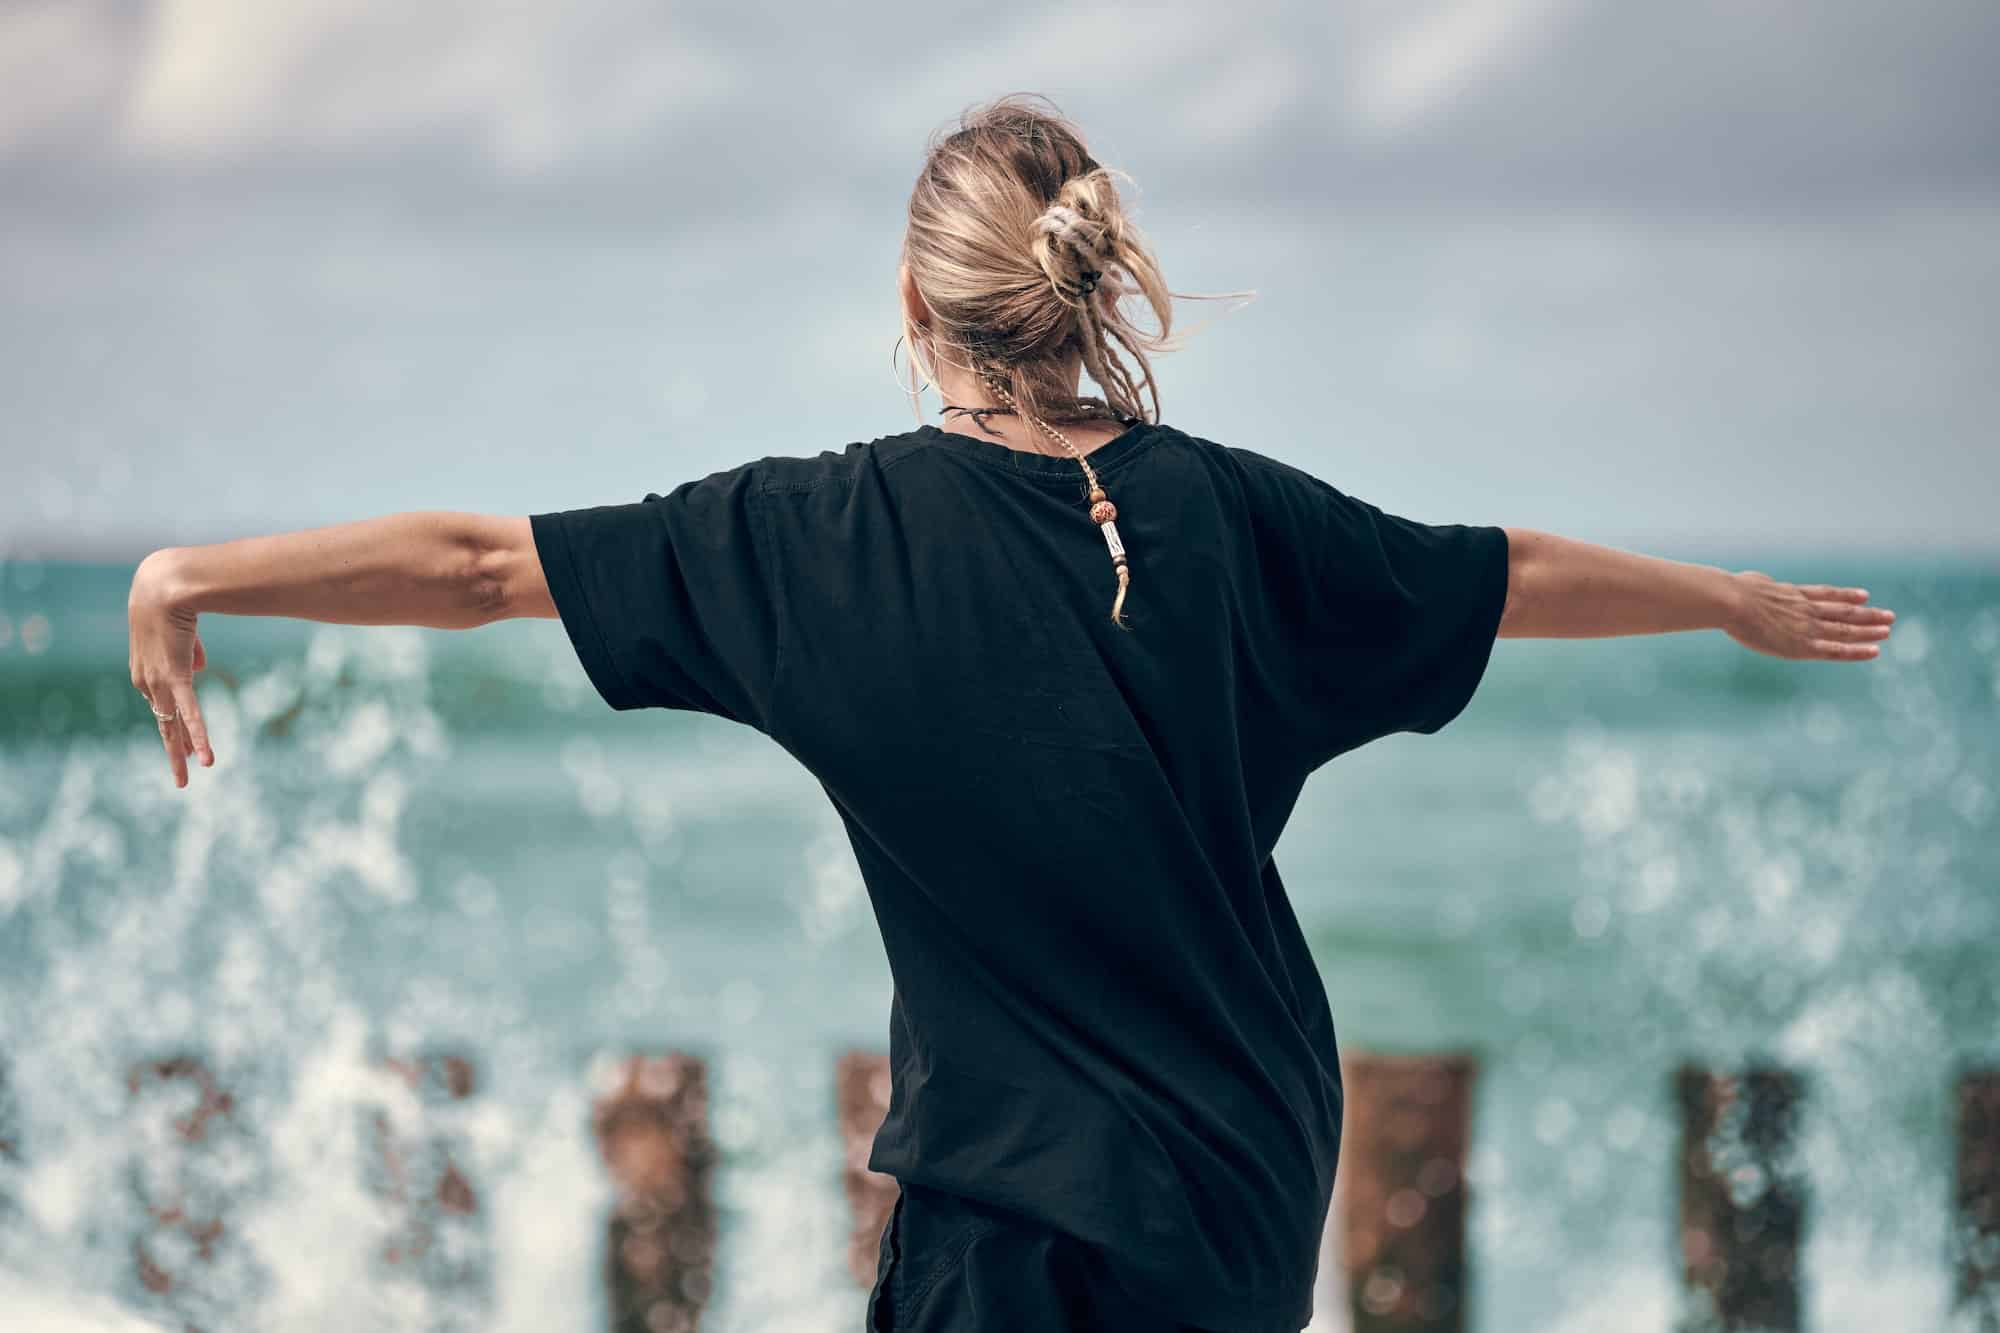 Frau tanzt zu Musik an der Meeresküste, Rückansicht, Tänzer bei Kunstperformance-Musikfestival im Freien